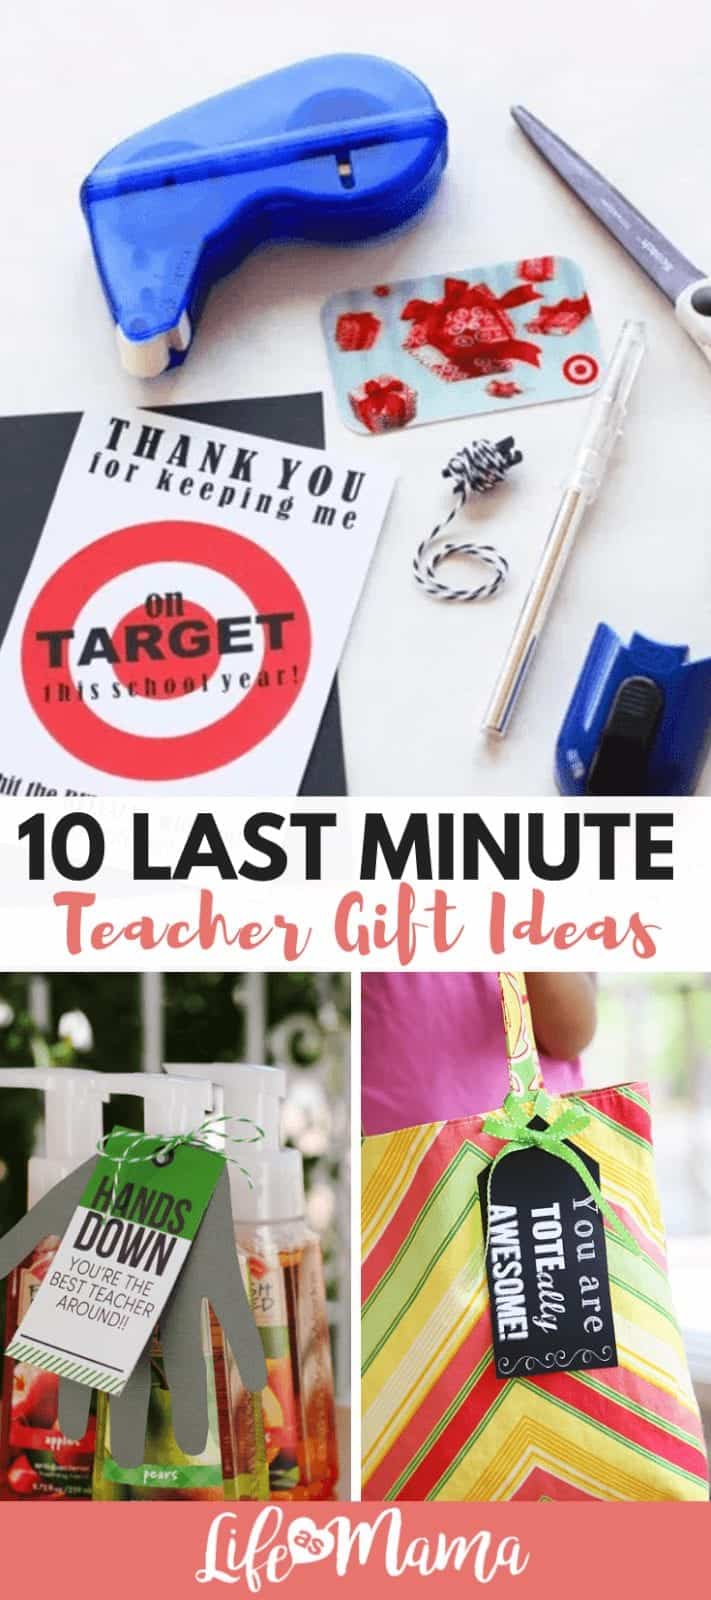 10 Last Minute Teacher Gift Ideas